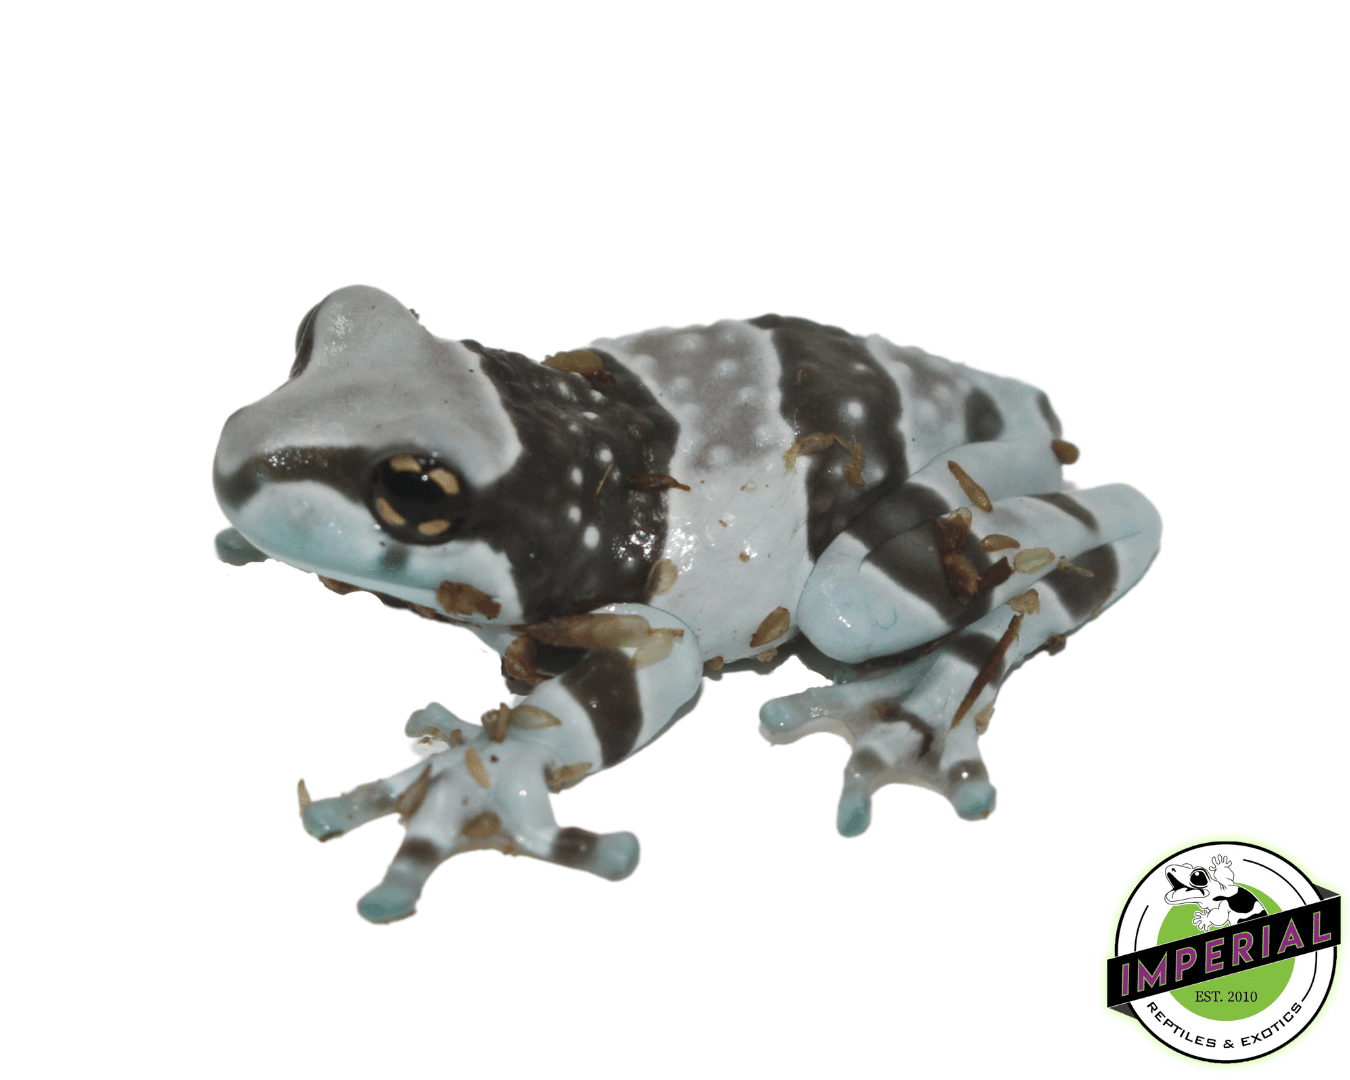 amazon milk frog for sale, buy amphibians online